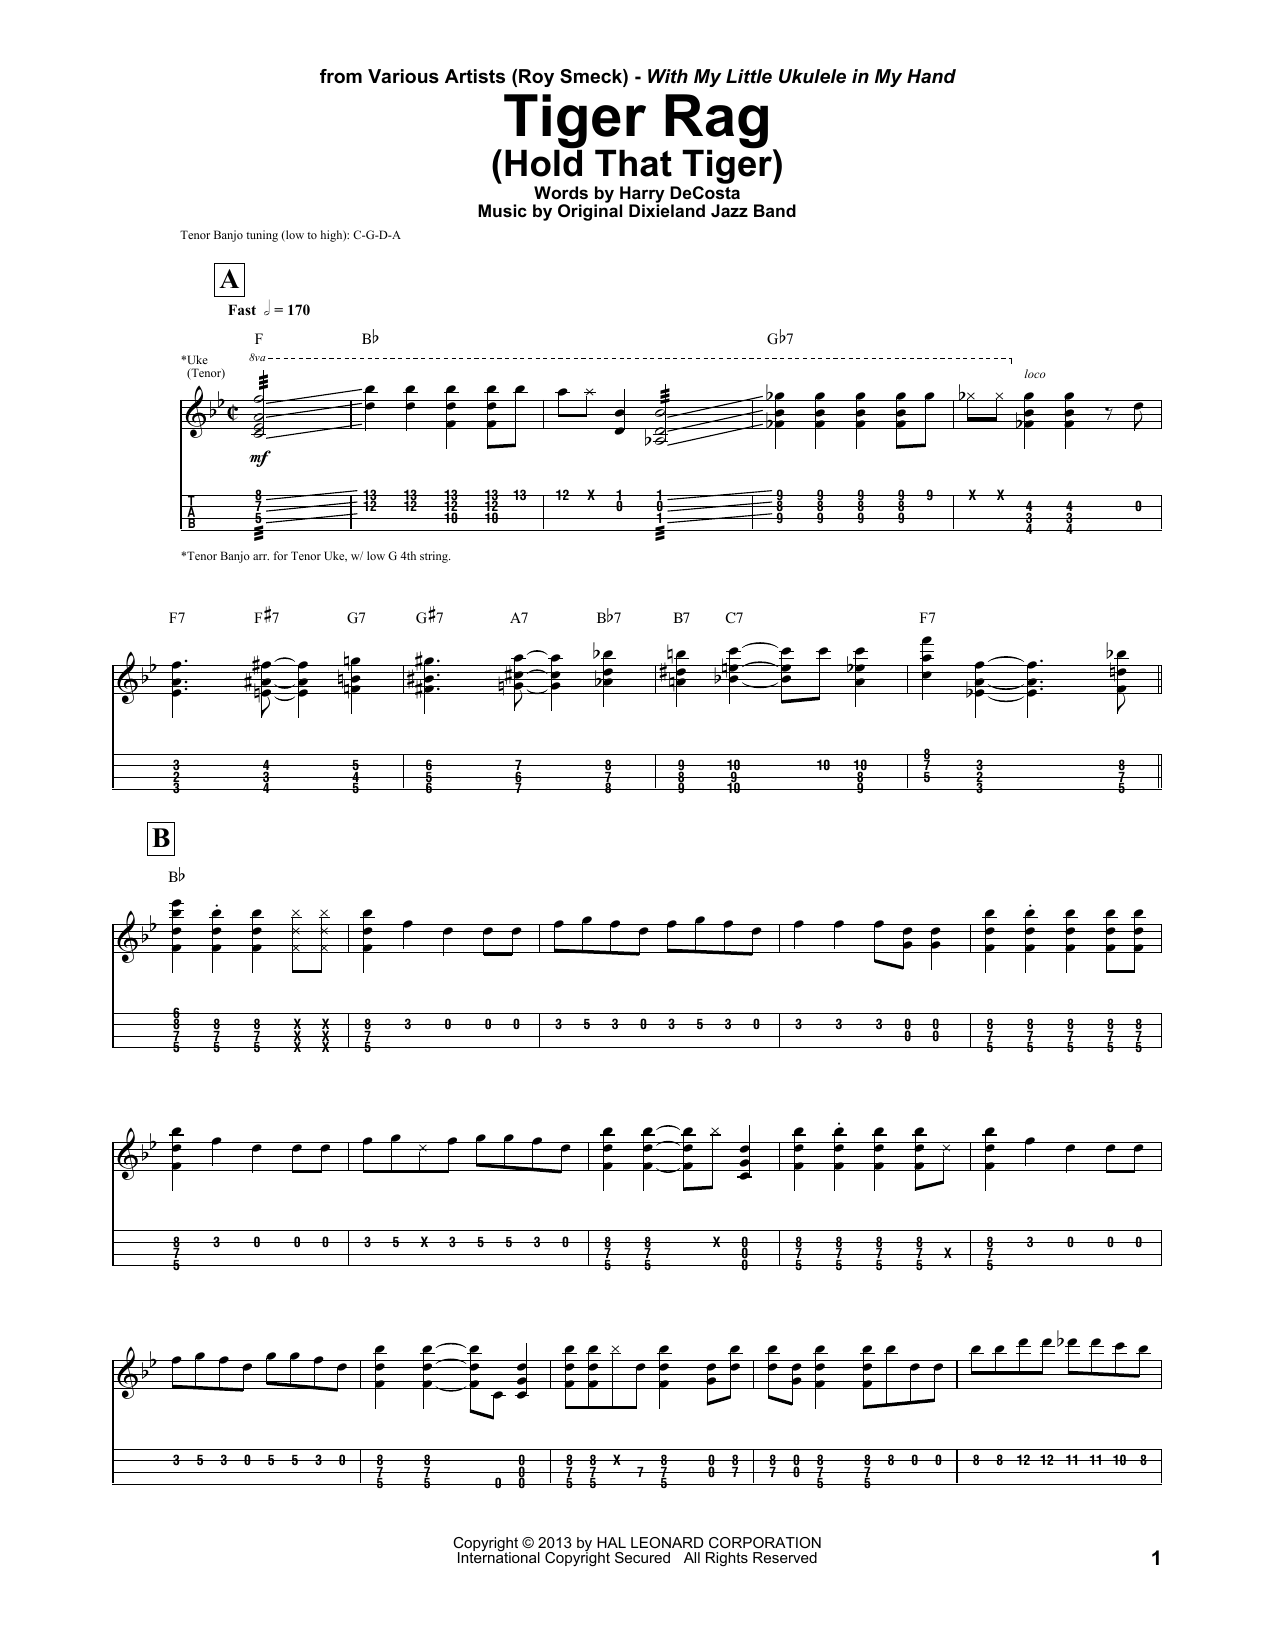 Roy Smeck Tiger Rag (Hold That Tiger) Sheet Music Notes & Chords for UKETAB - Download or Print PDF